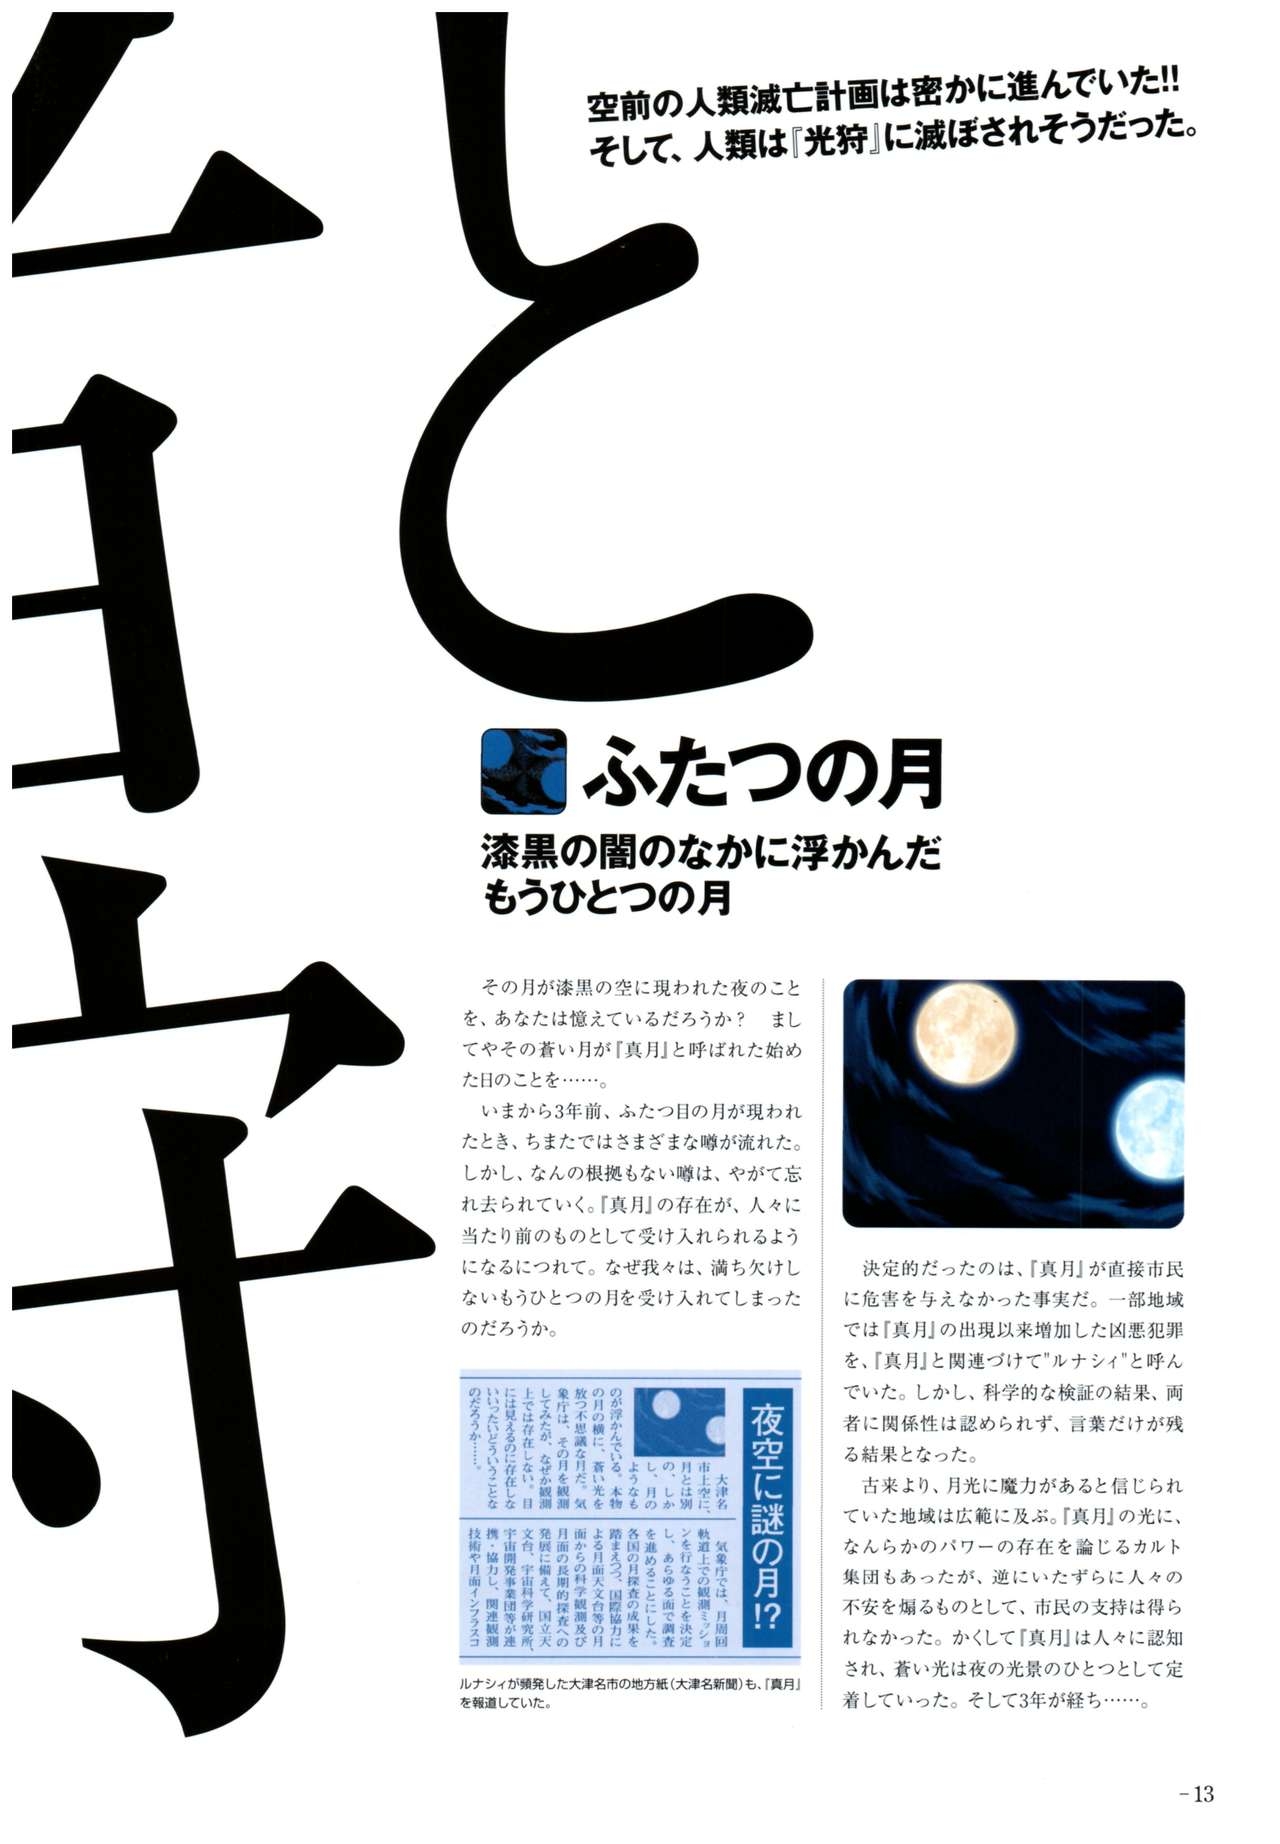 Yoru Ga Kuru! Square Of The Moon Visual Fan Book 8